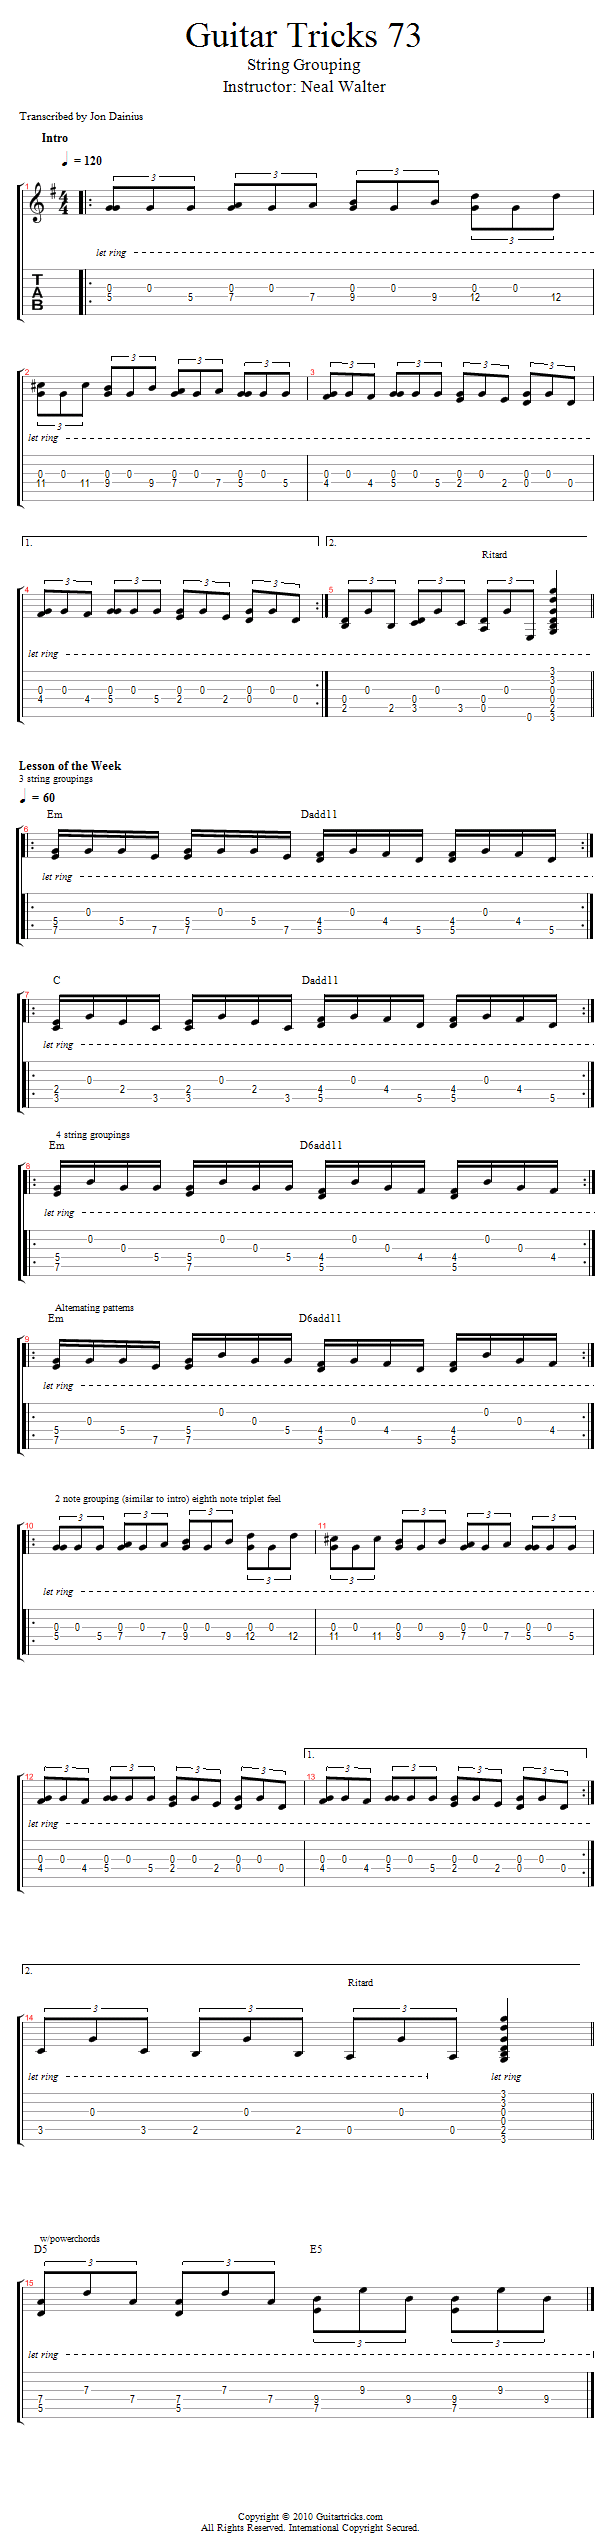 Guitar Tricks 73: String Grouping song notation